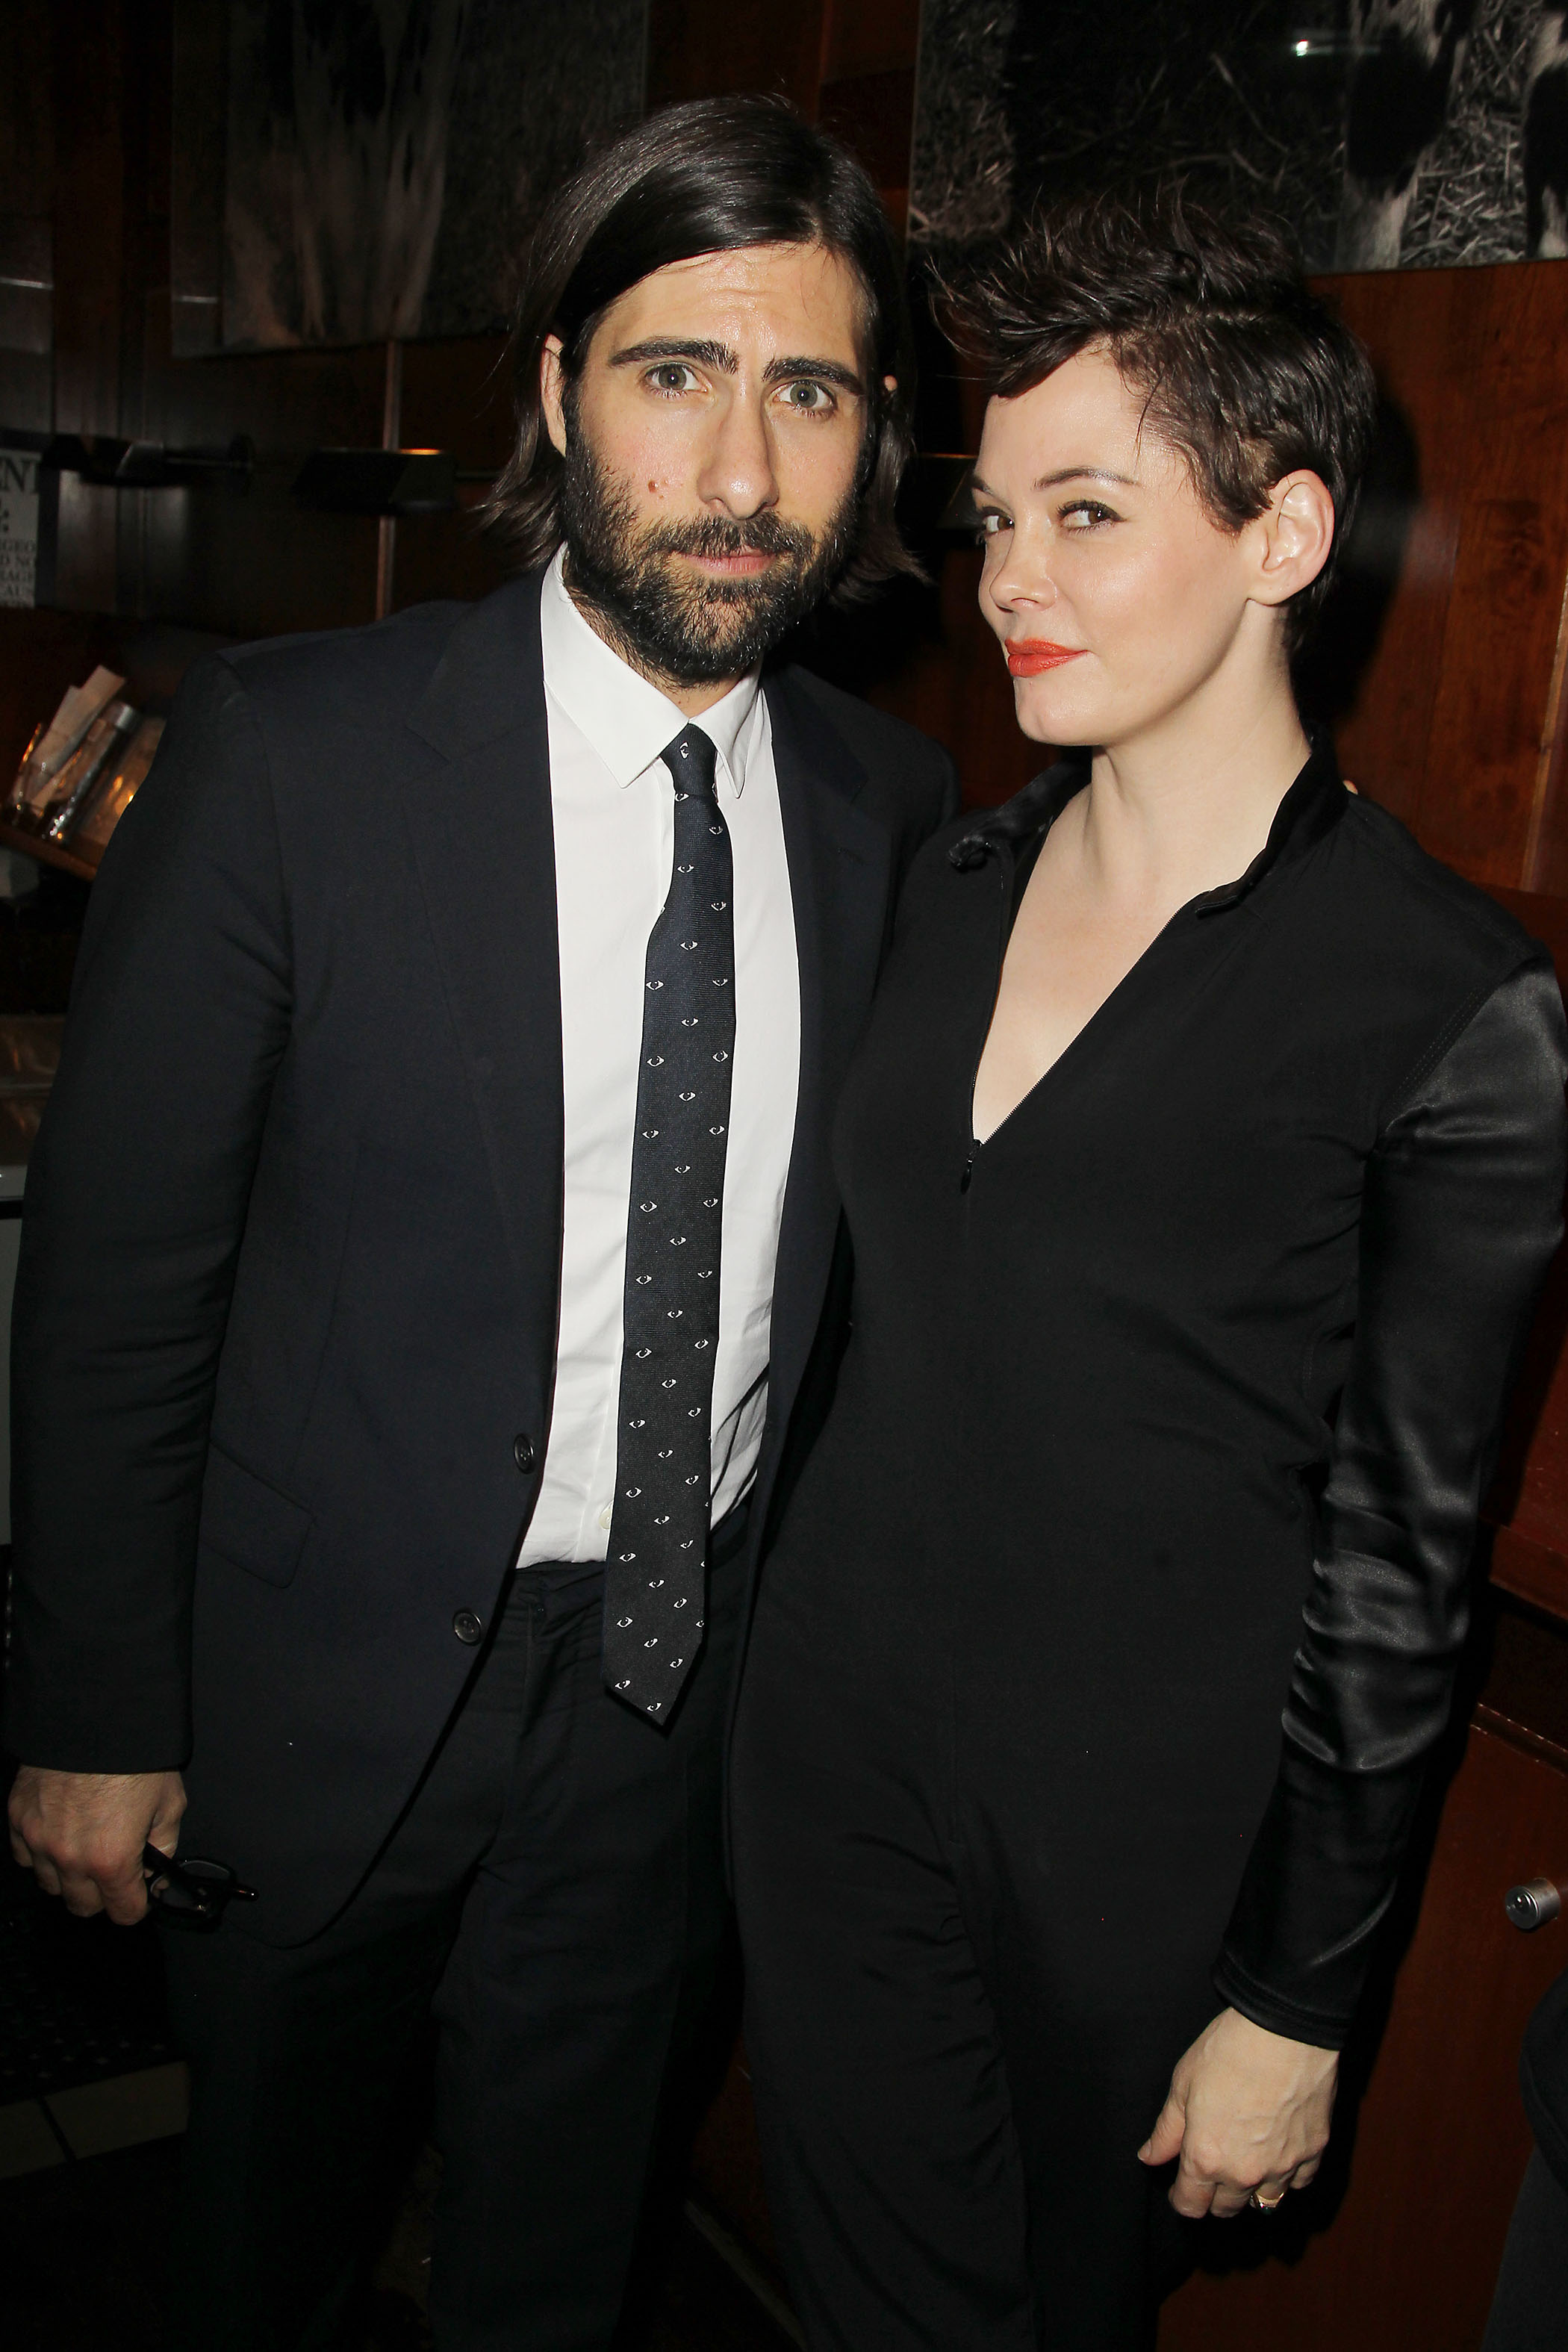 Jason Schwartzman and Rose McGowan - The 2014 NYFF Presents Tribeca Film's "LISTEN UP PHILLIP" 